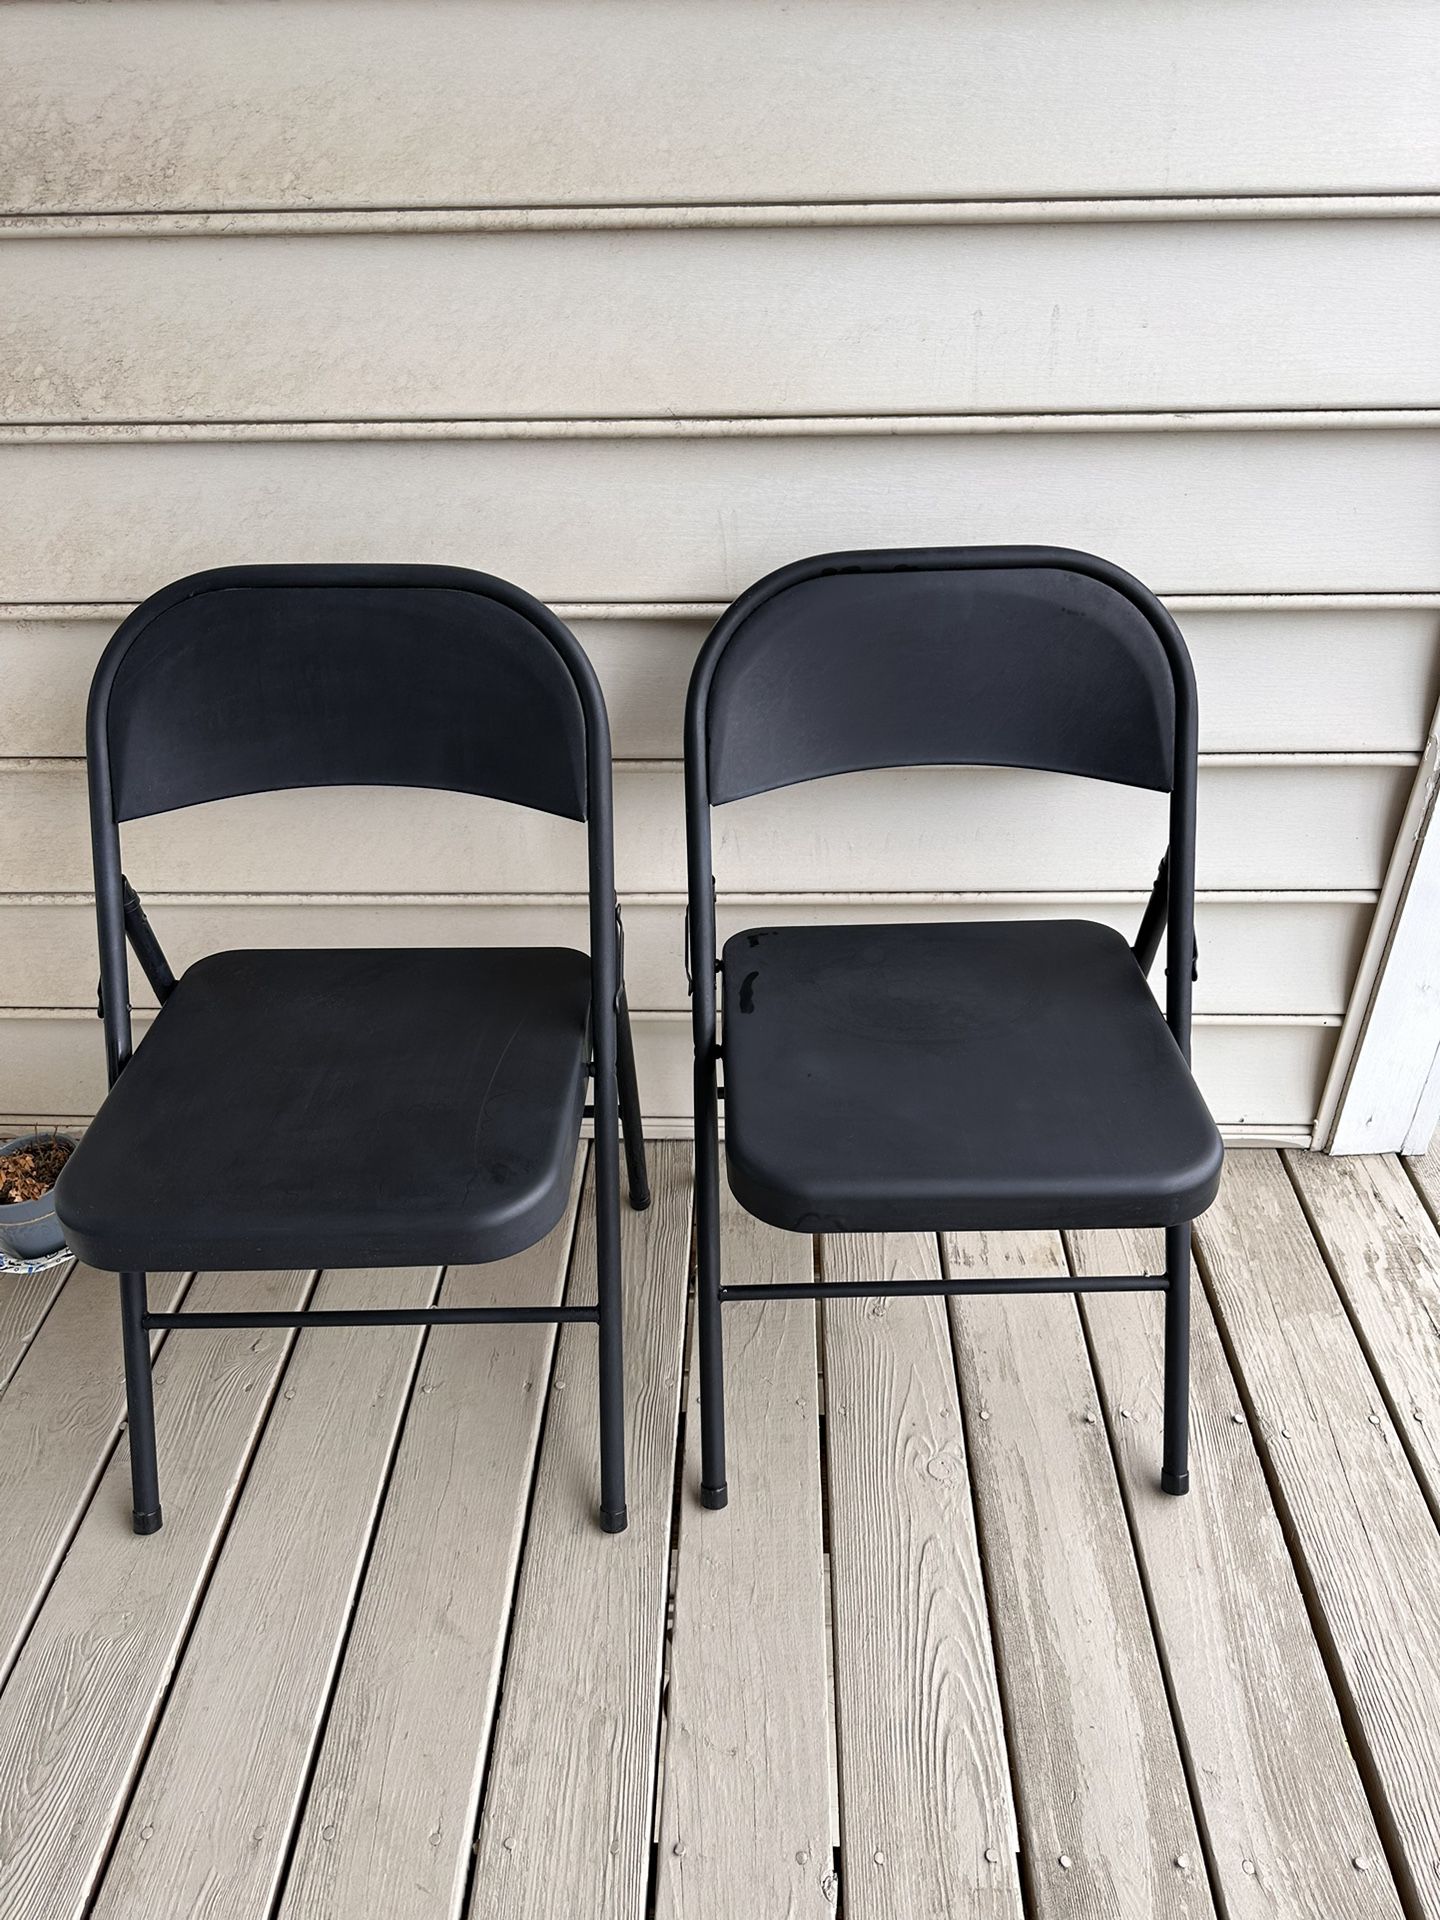 Free Metal Chairs